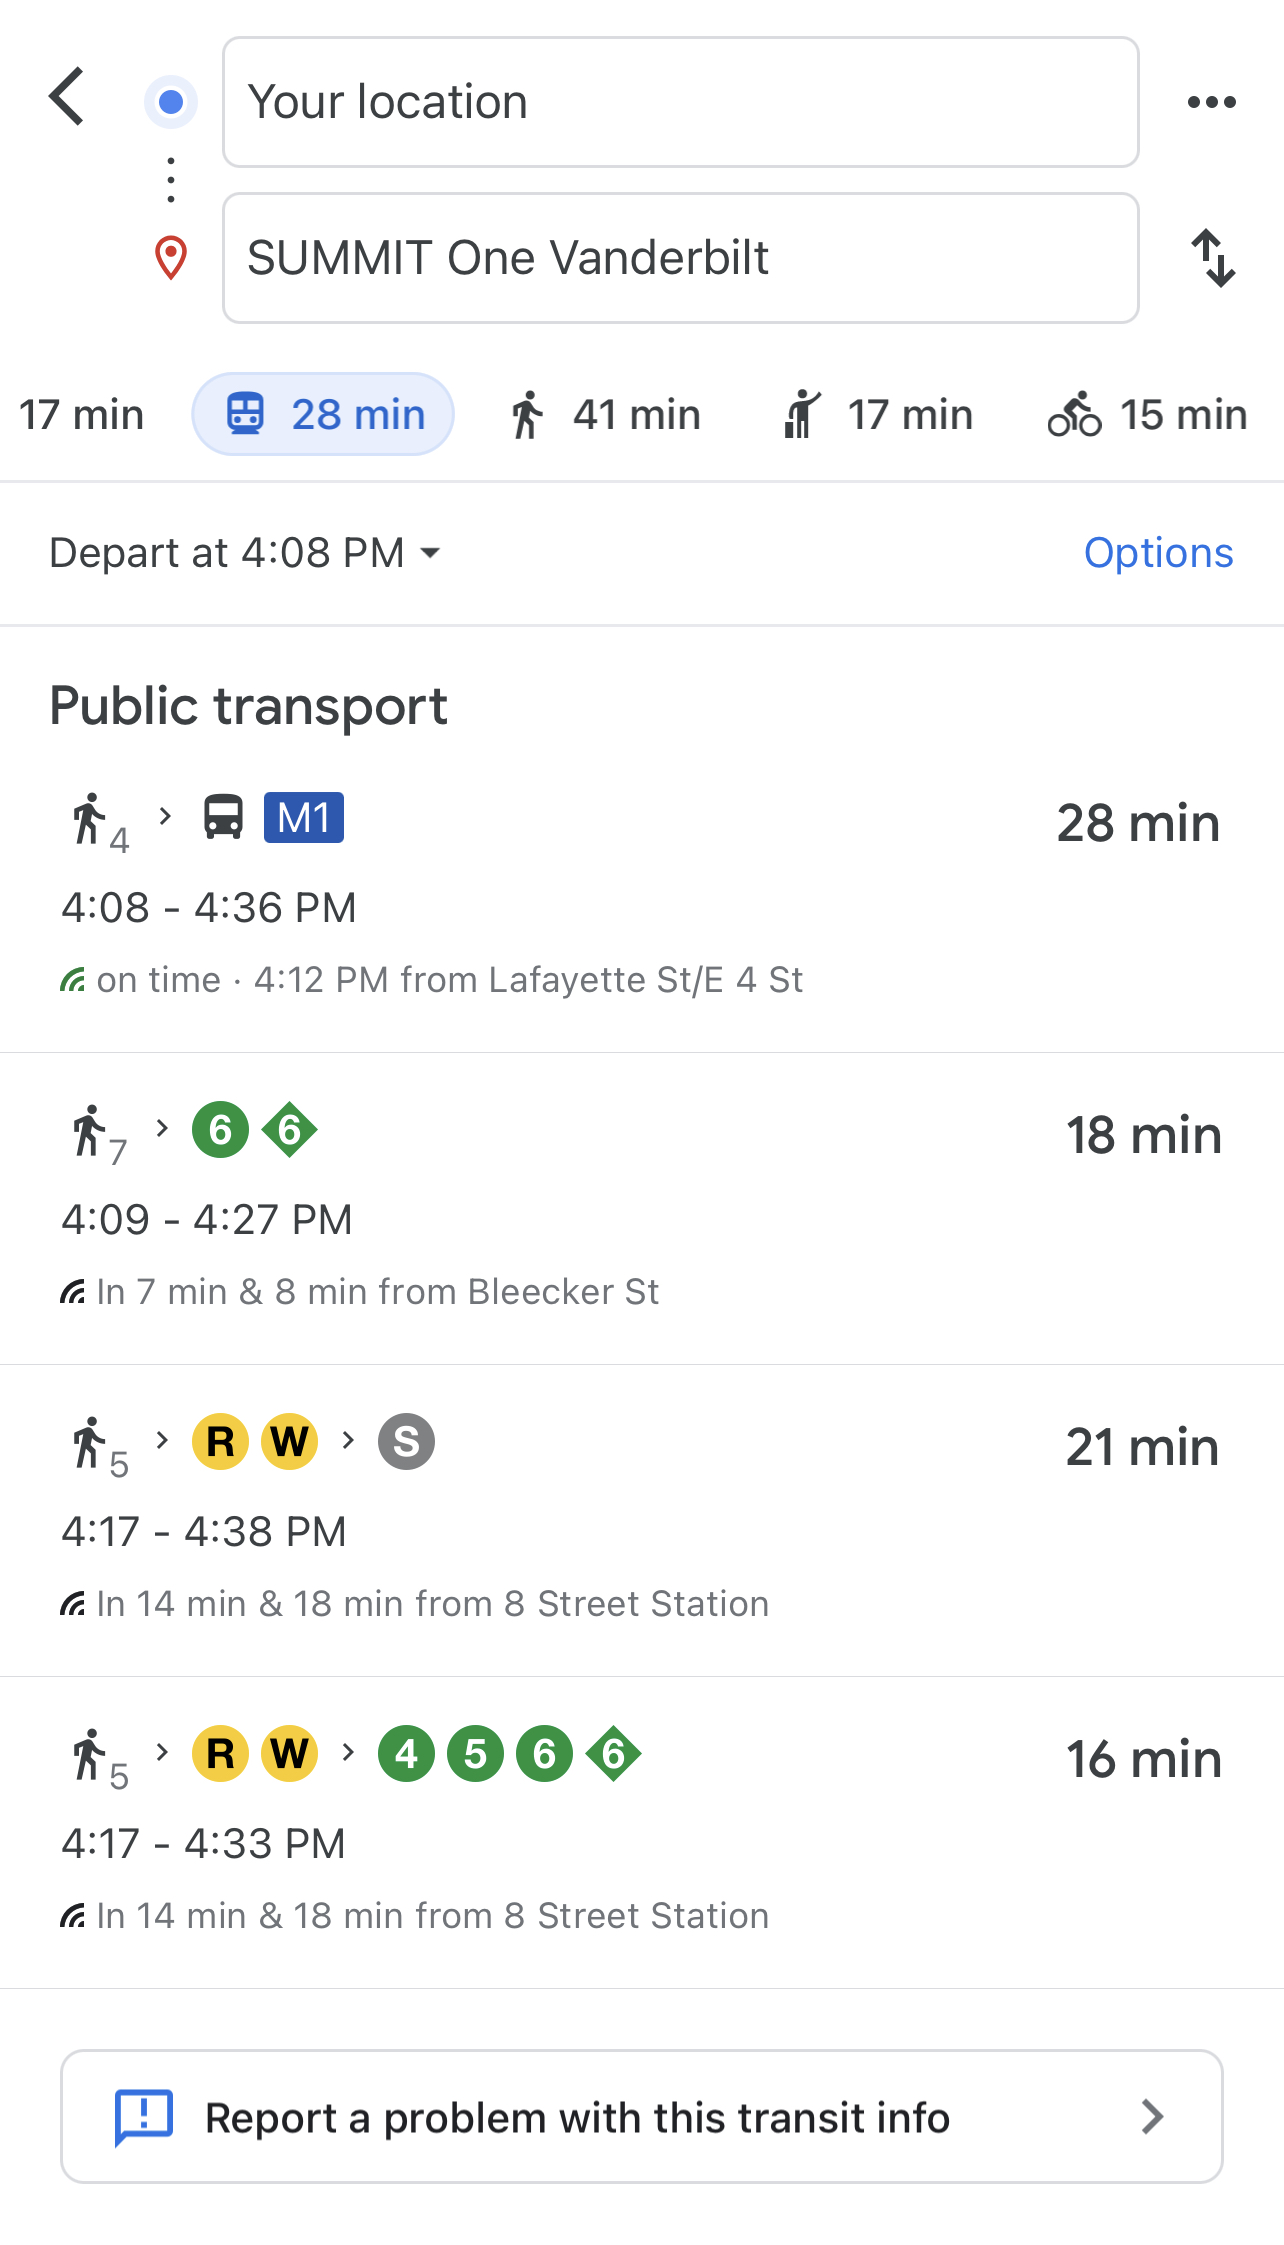 New York City Google Maps transit information from “Your location” to SUMMIT One Vanderbilt.